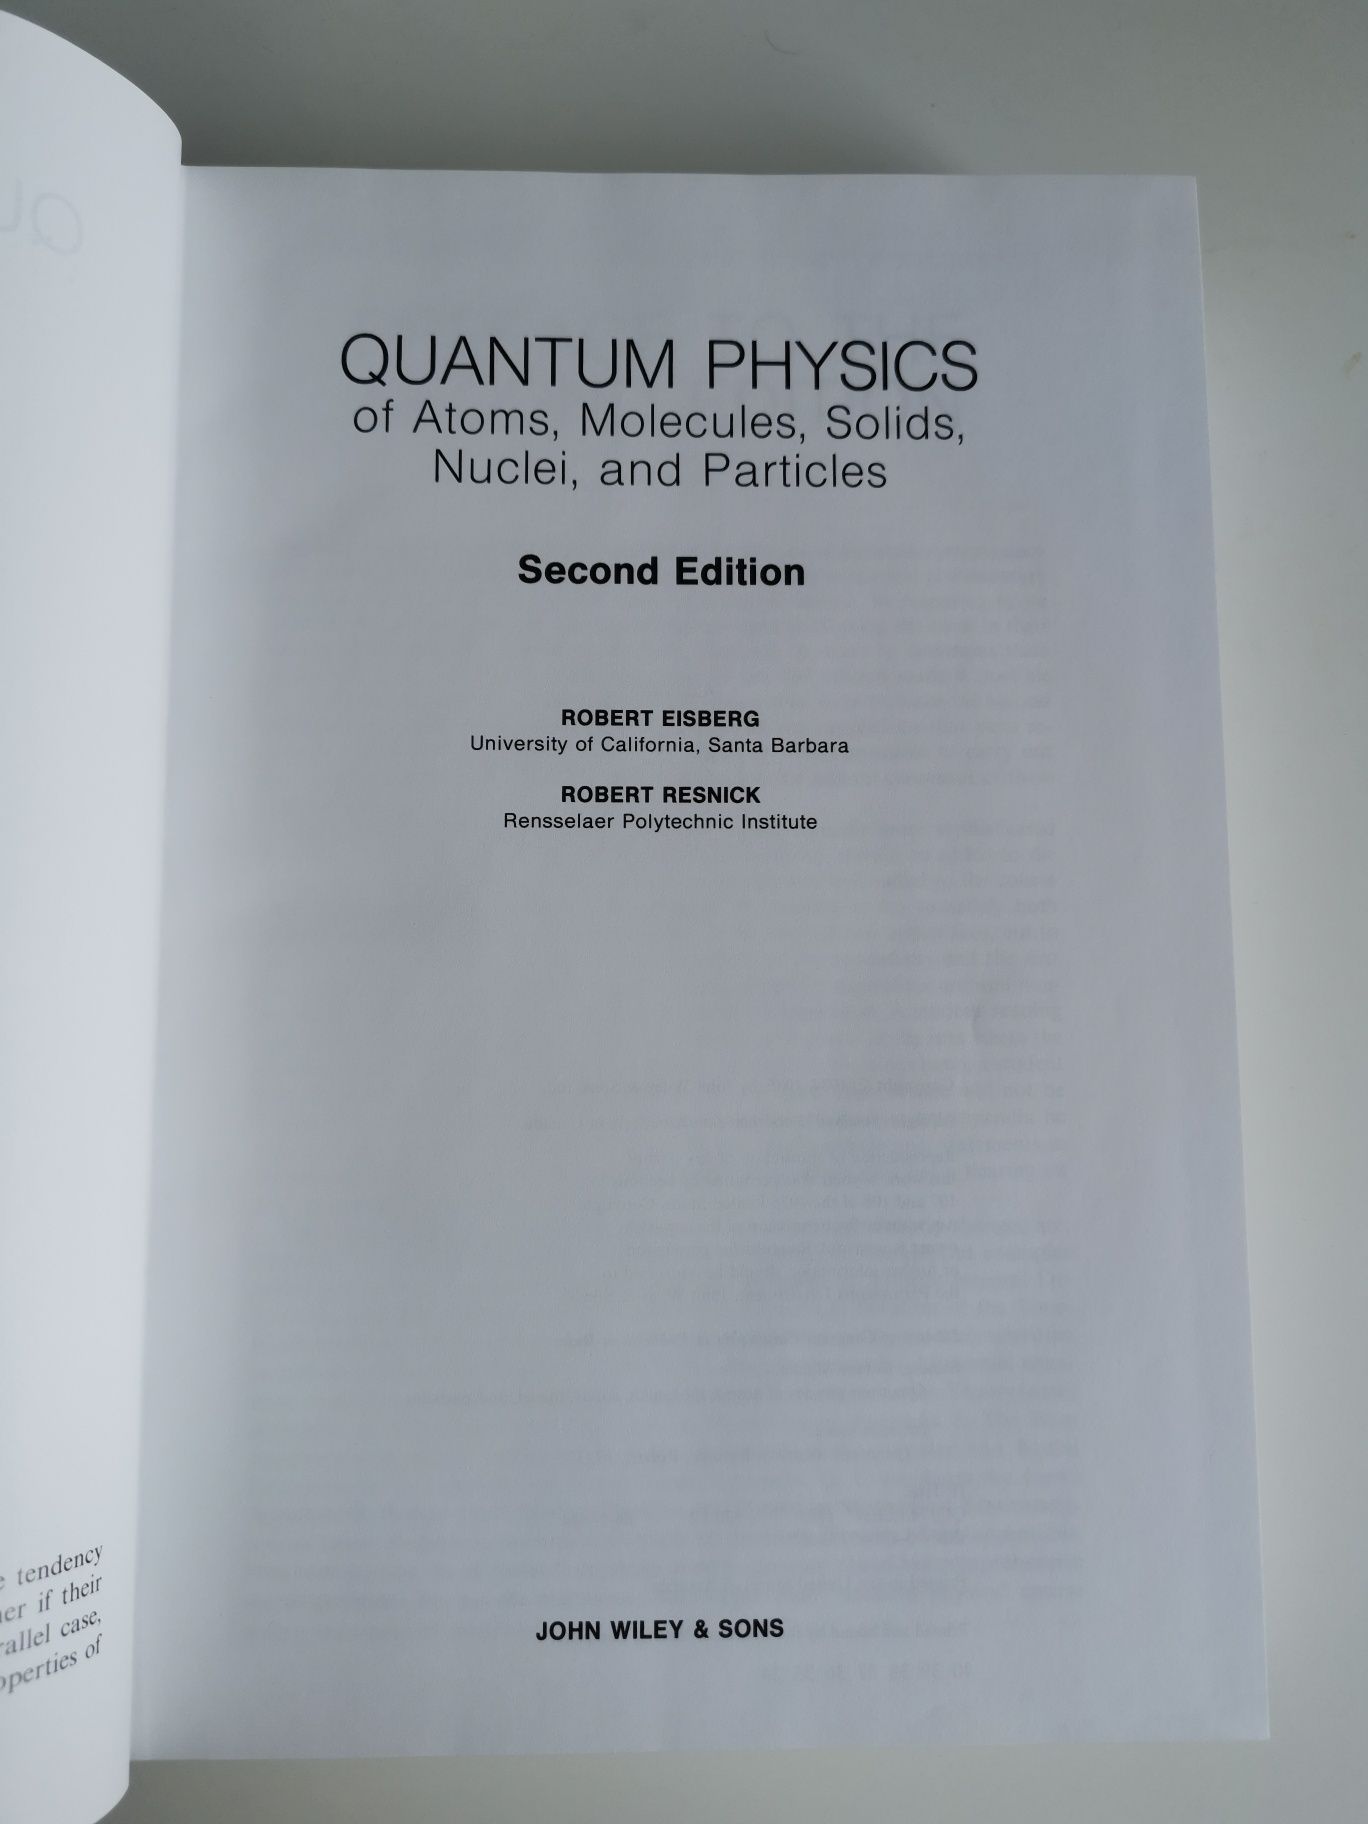 Quantum Physics Of Atoms, molecules, solids nuclei and particles